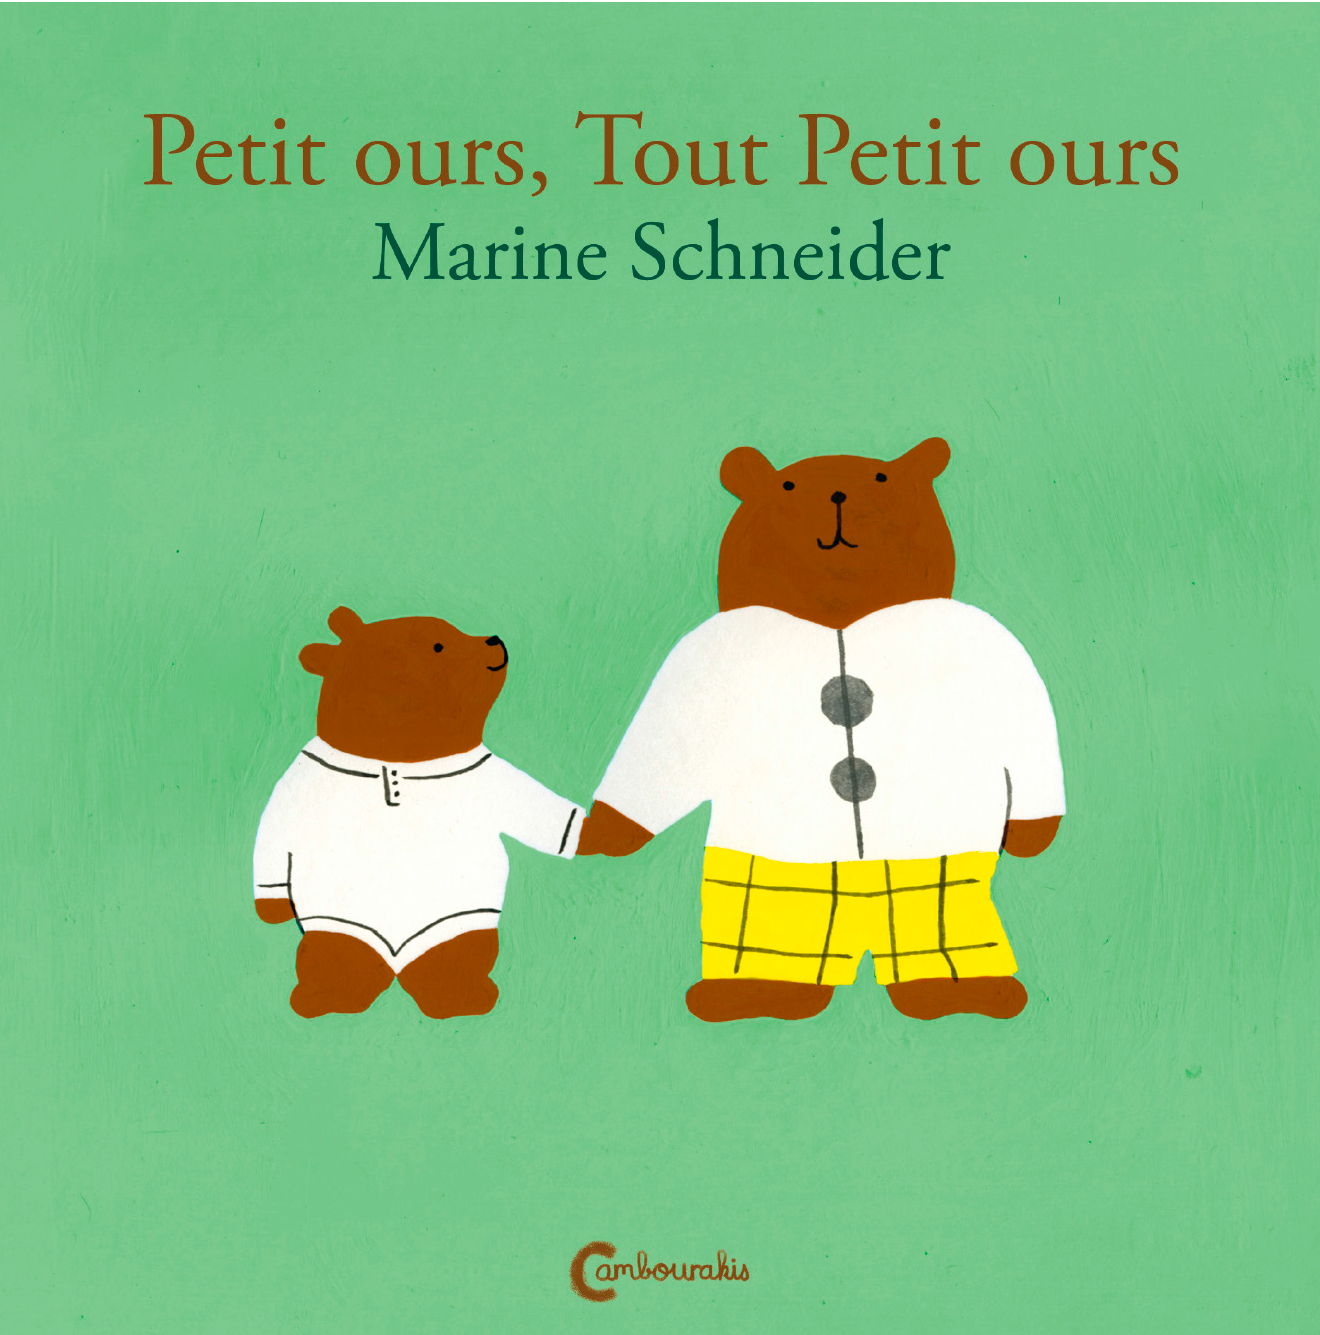 Petit ours Tout Petit ours_crop.png